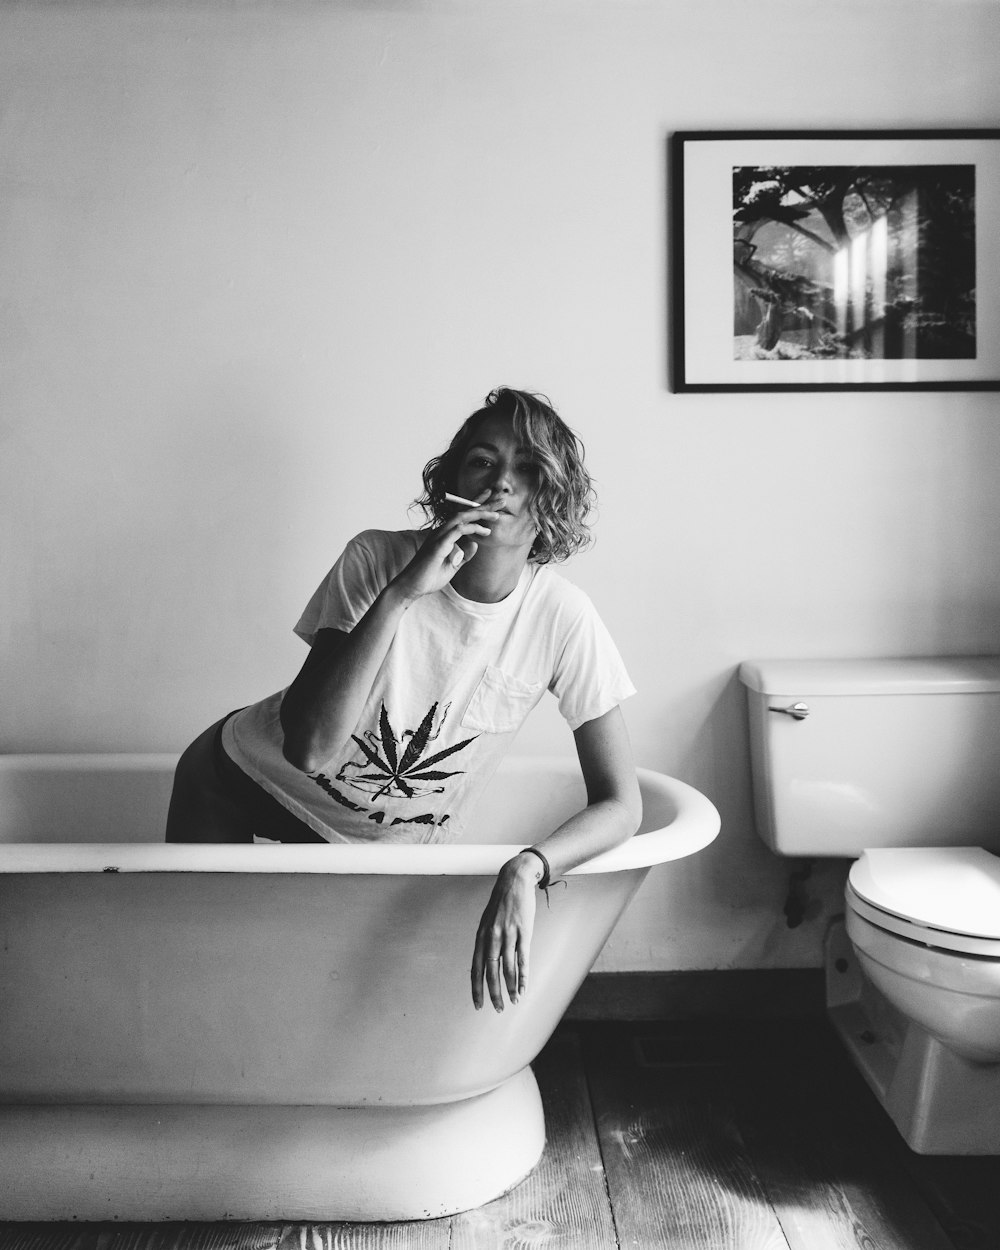 grayscale of woman smoking inside bathtub